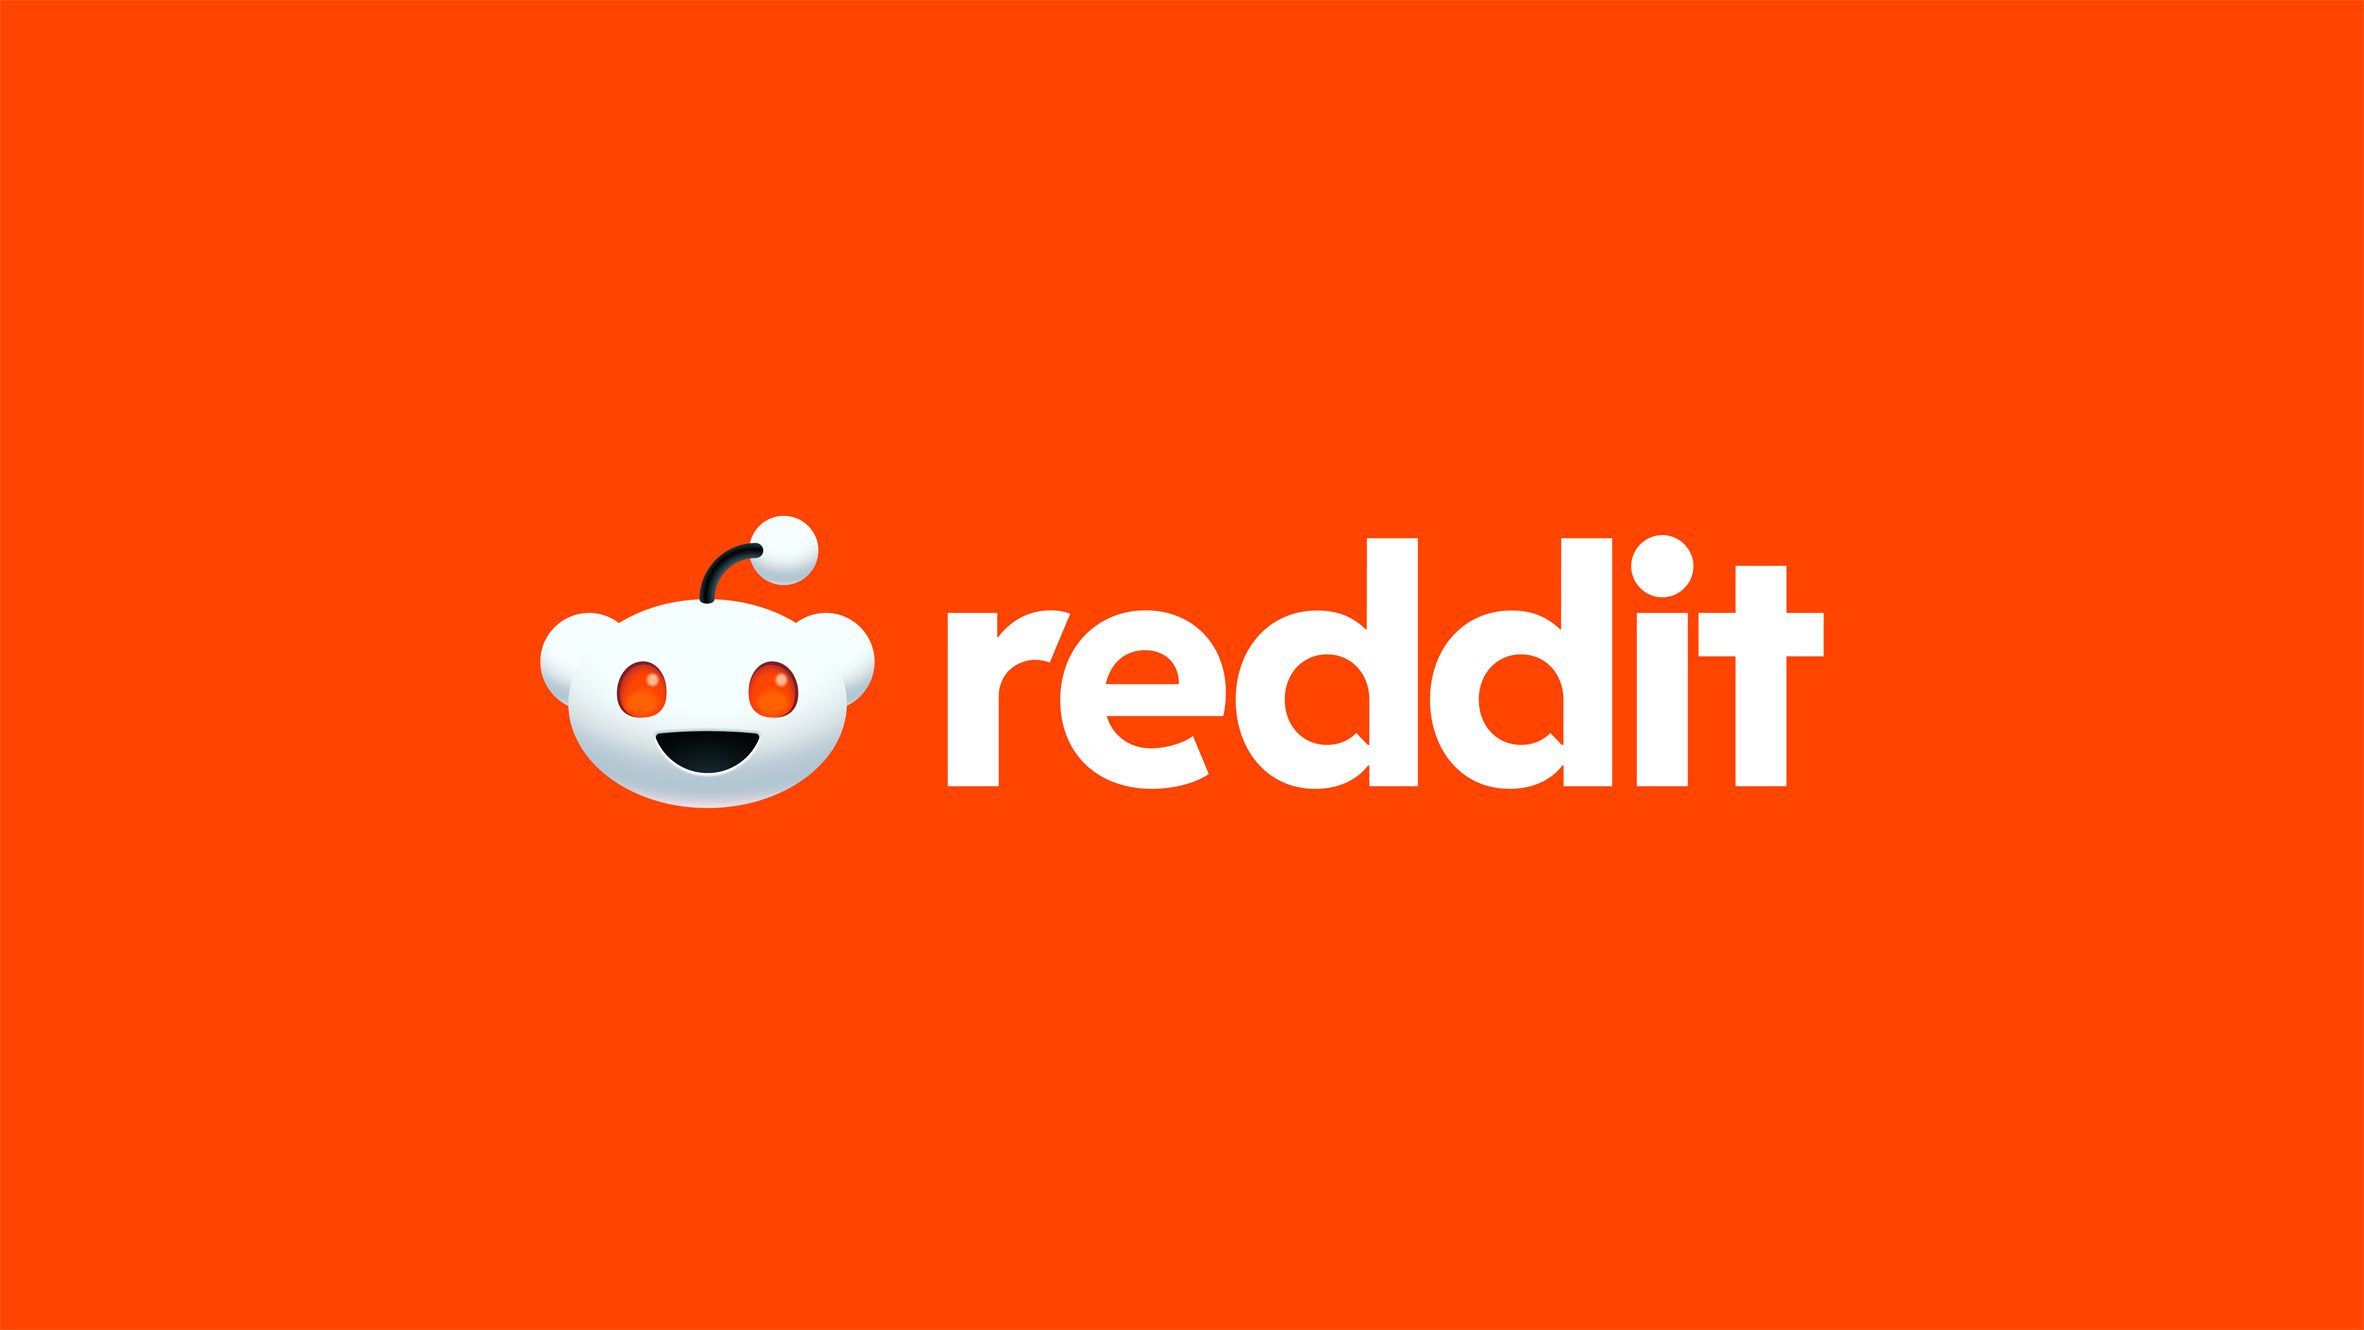 reddit logot orange rebrand